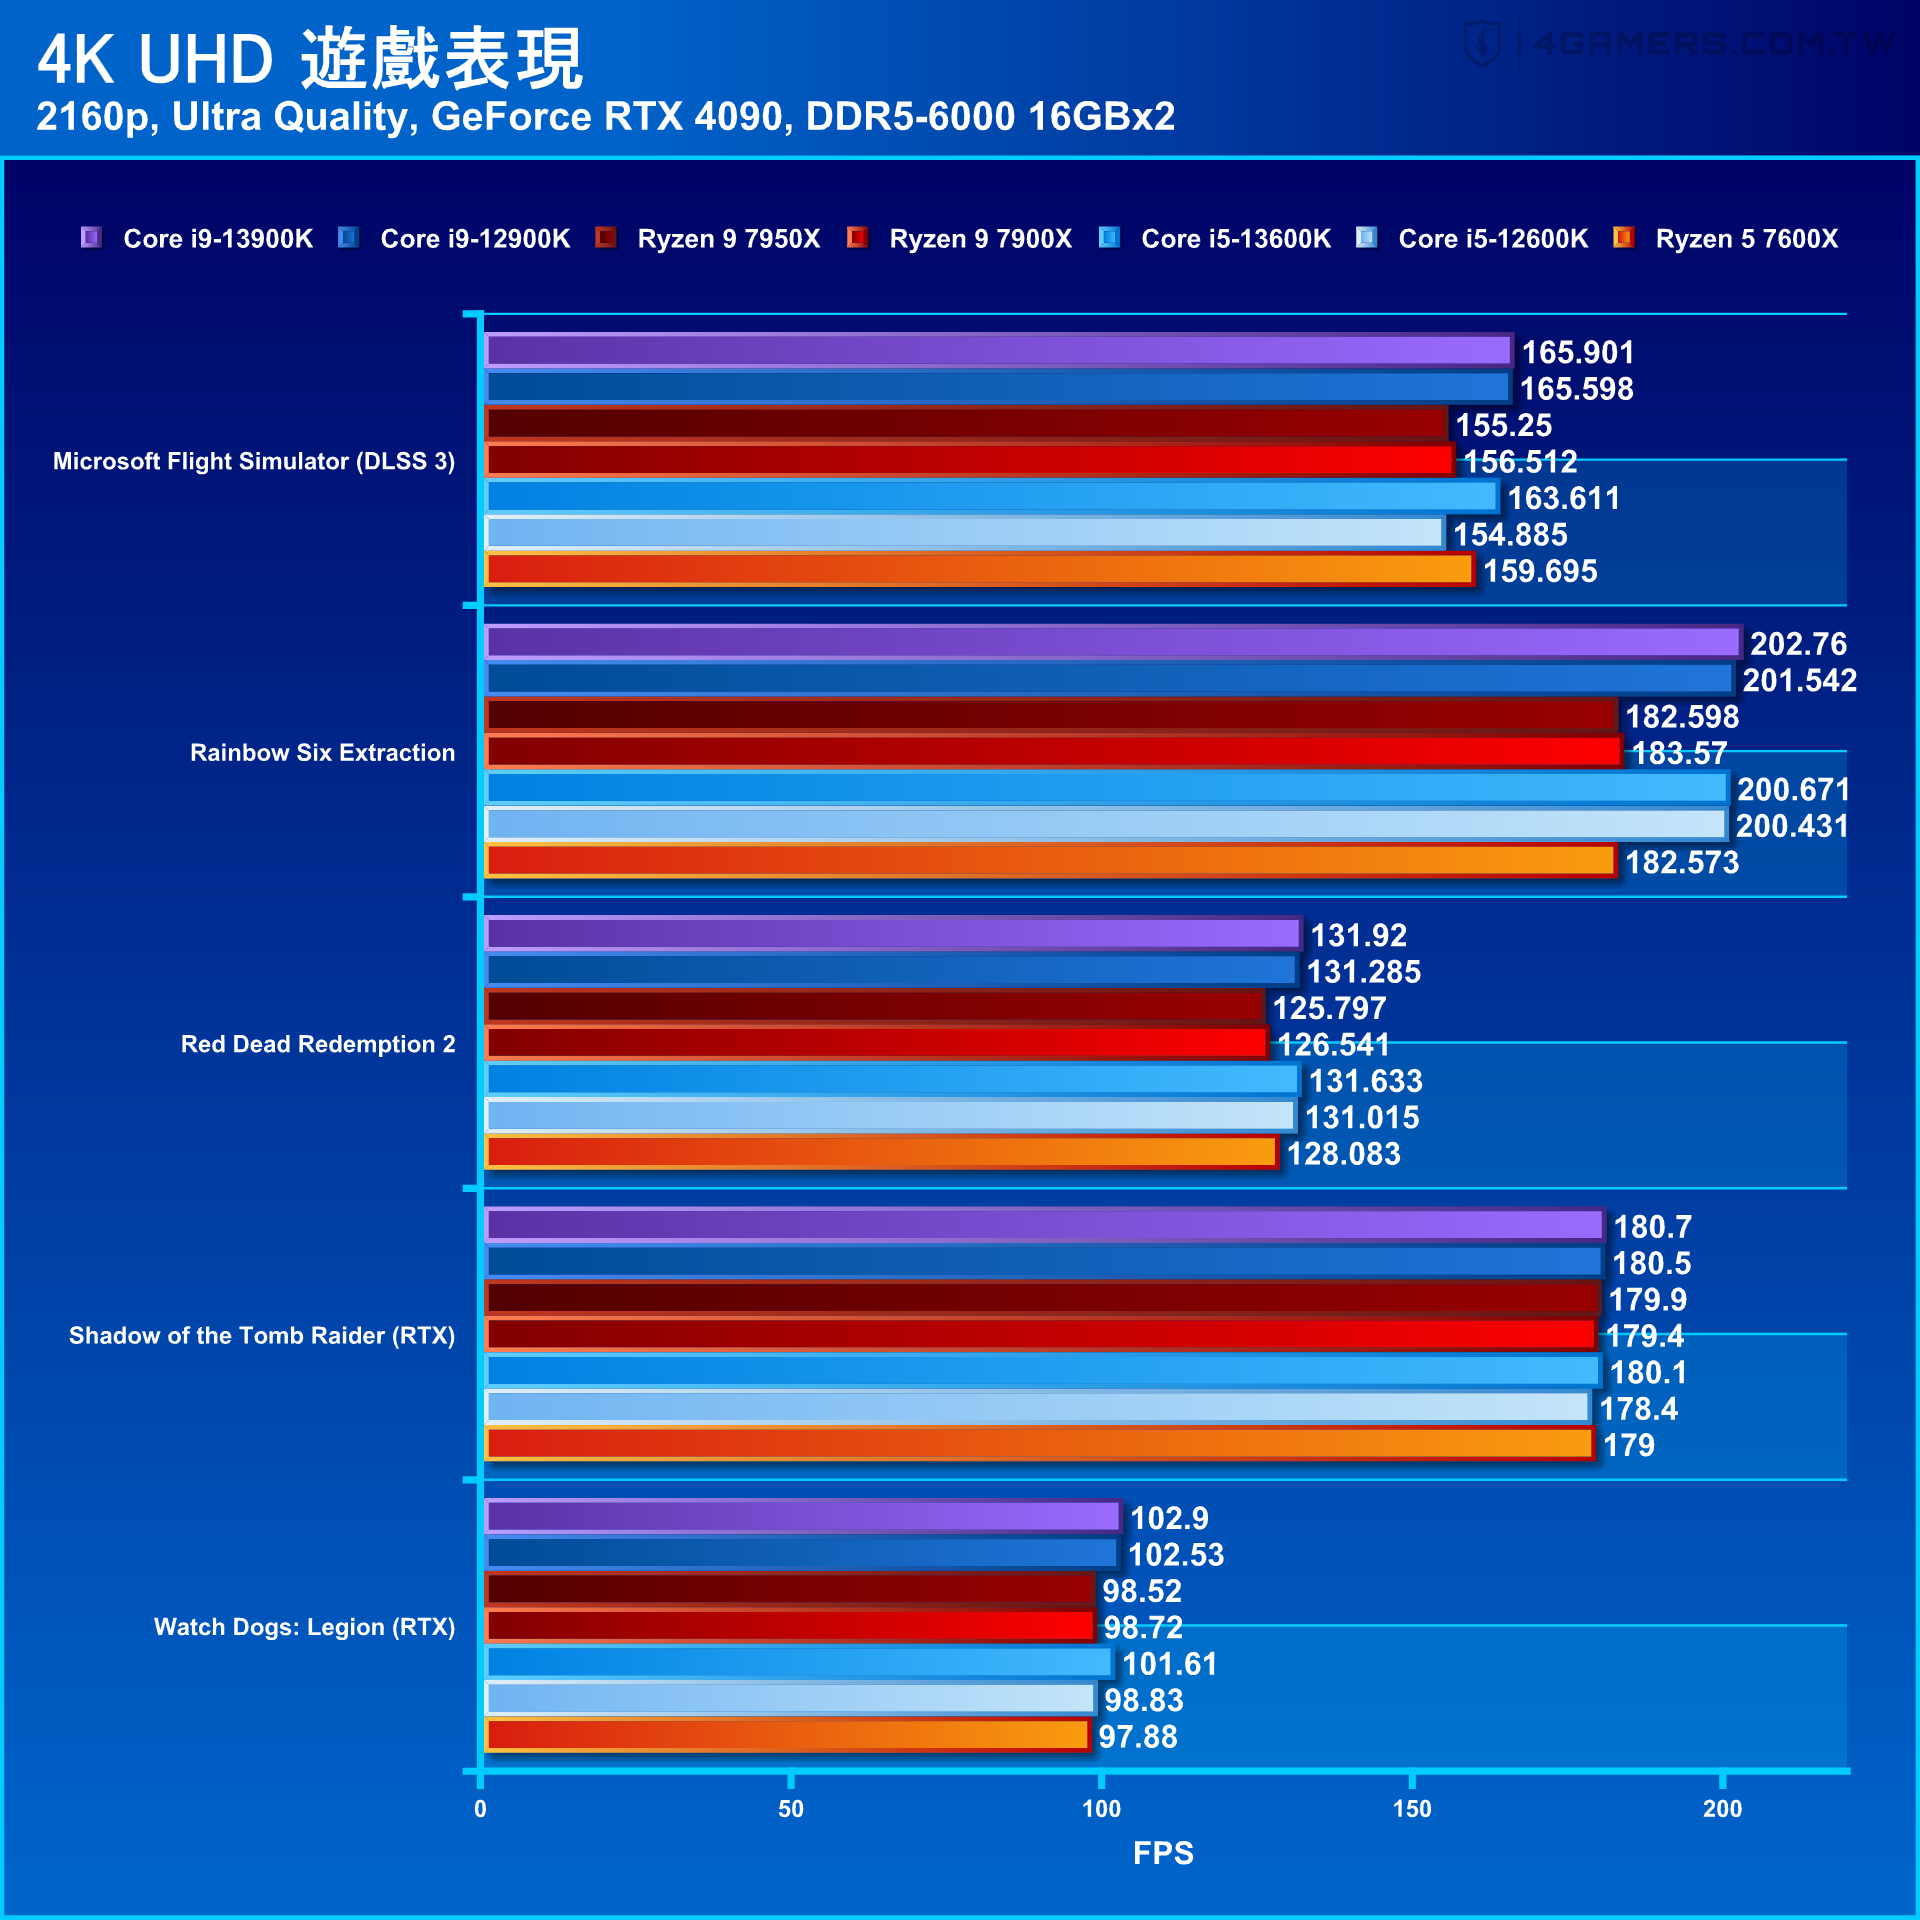 Intel Core i9-13900K and i5-13600K